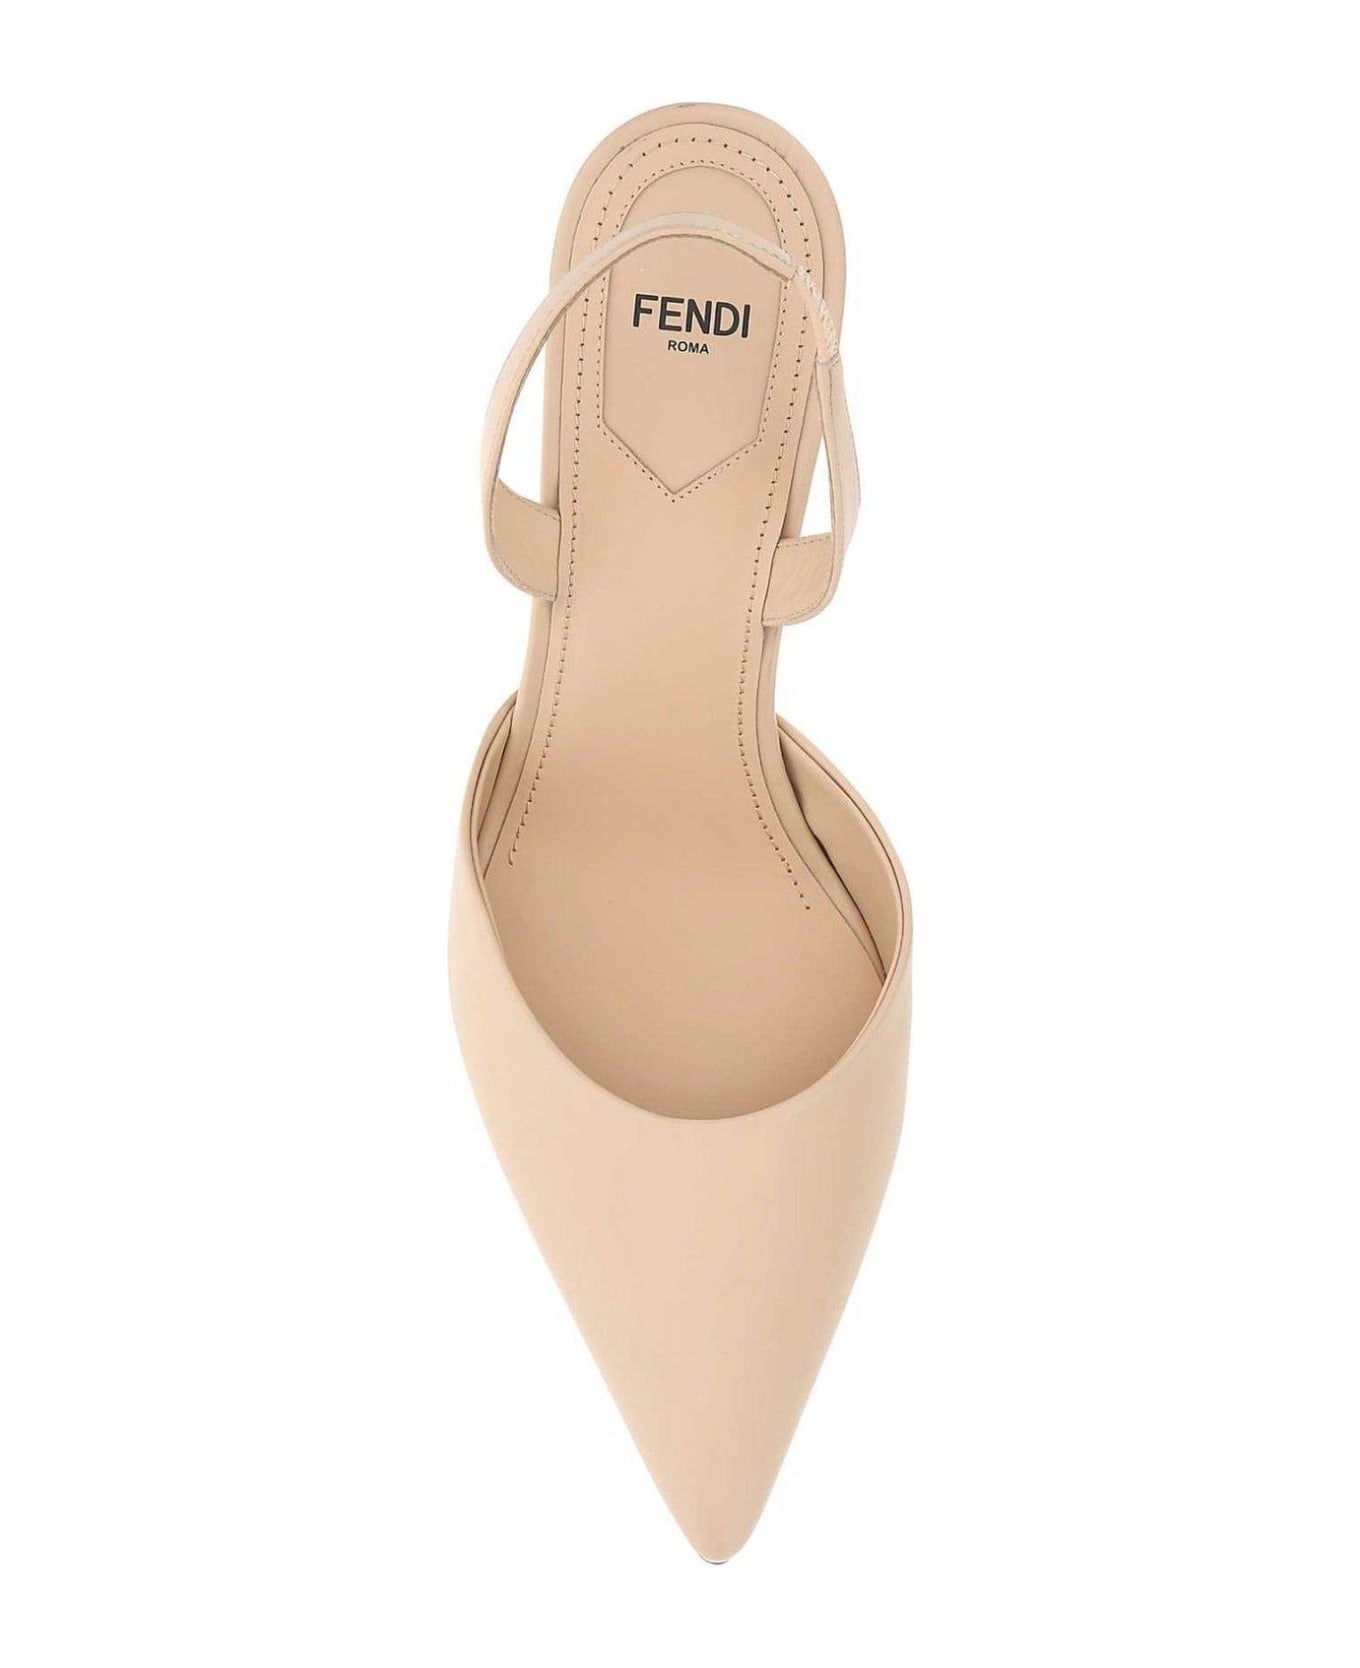 Fendi F-shaped Sculpted Heel Pumps - BEIGE